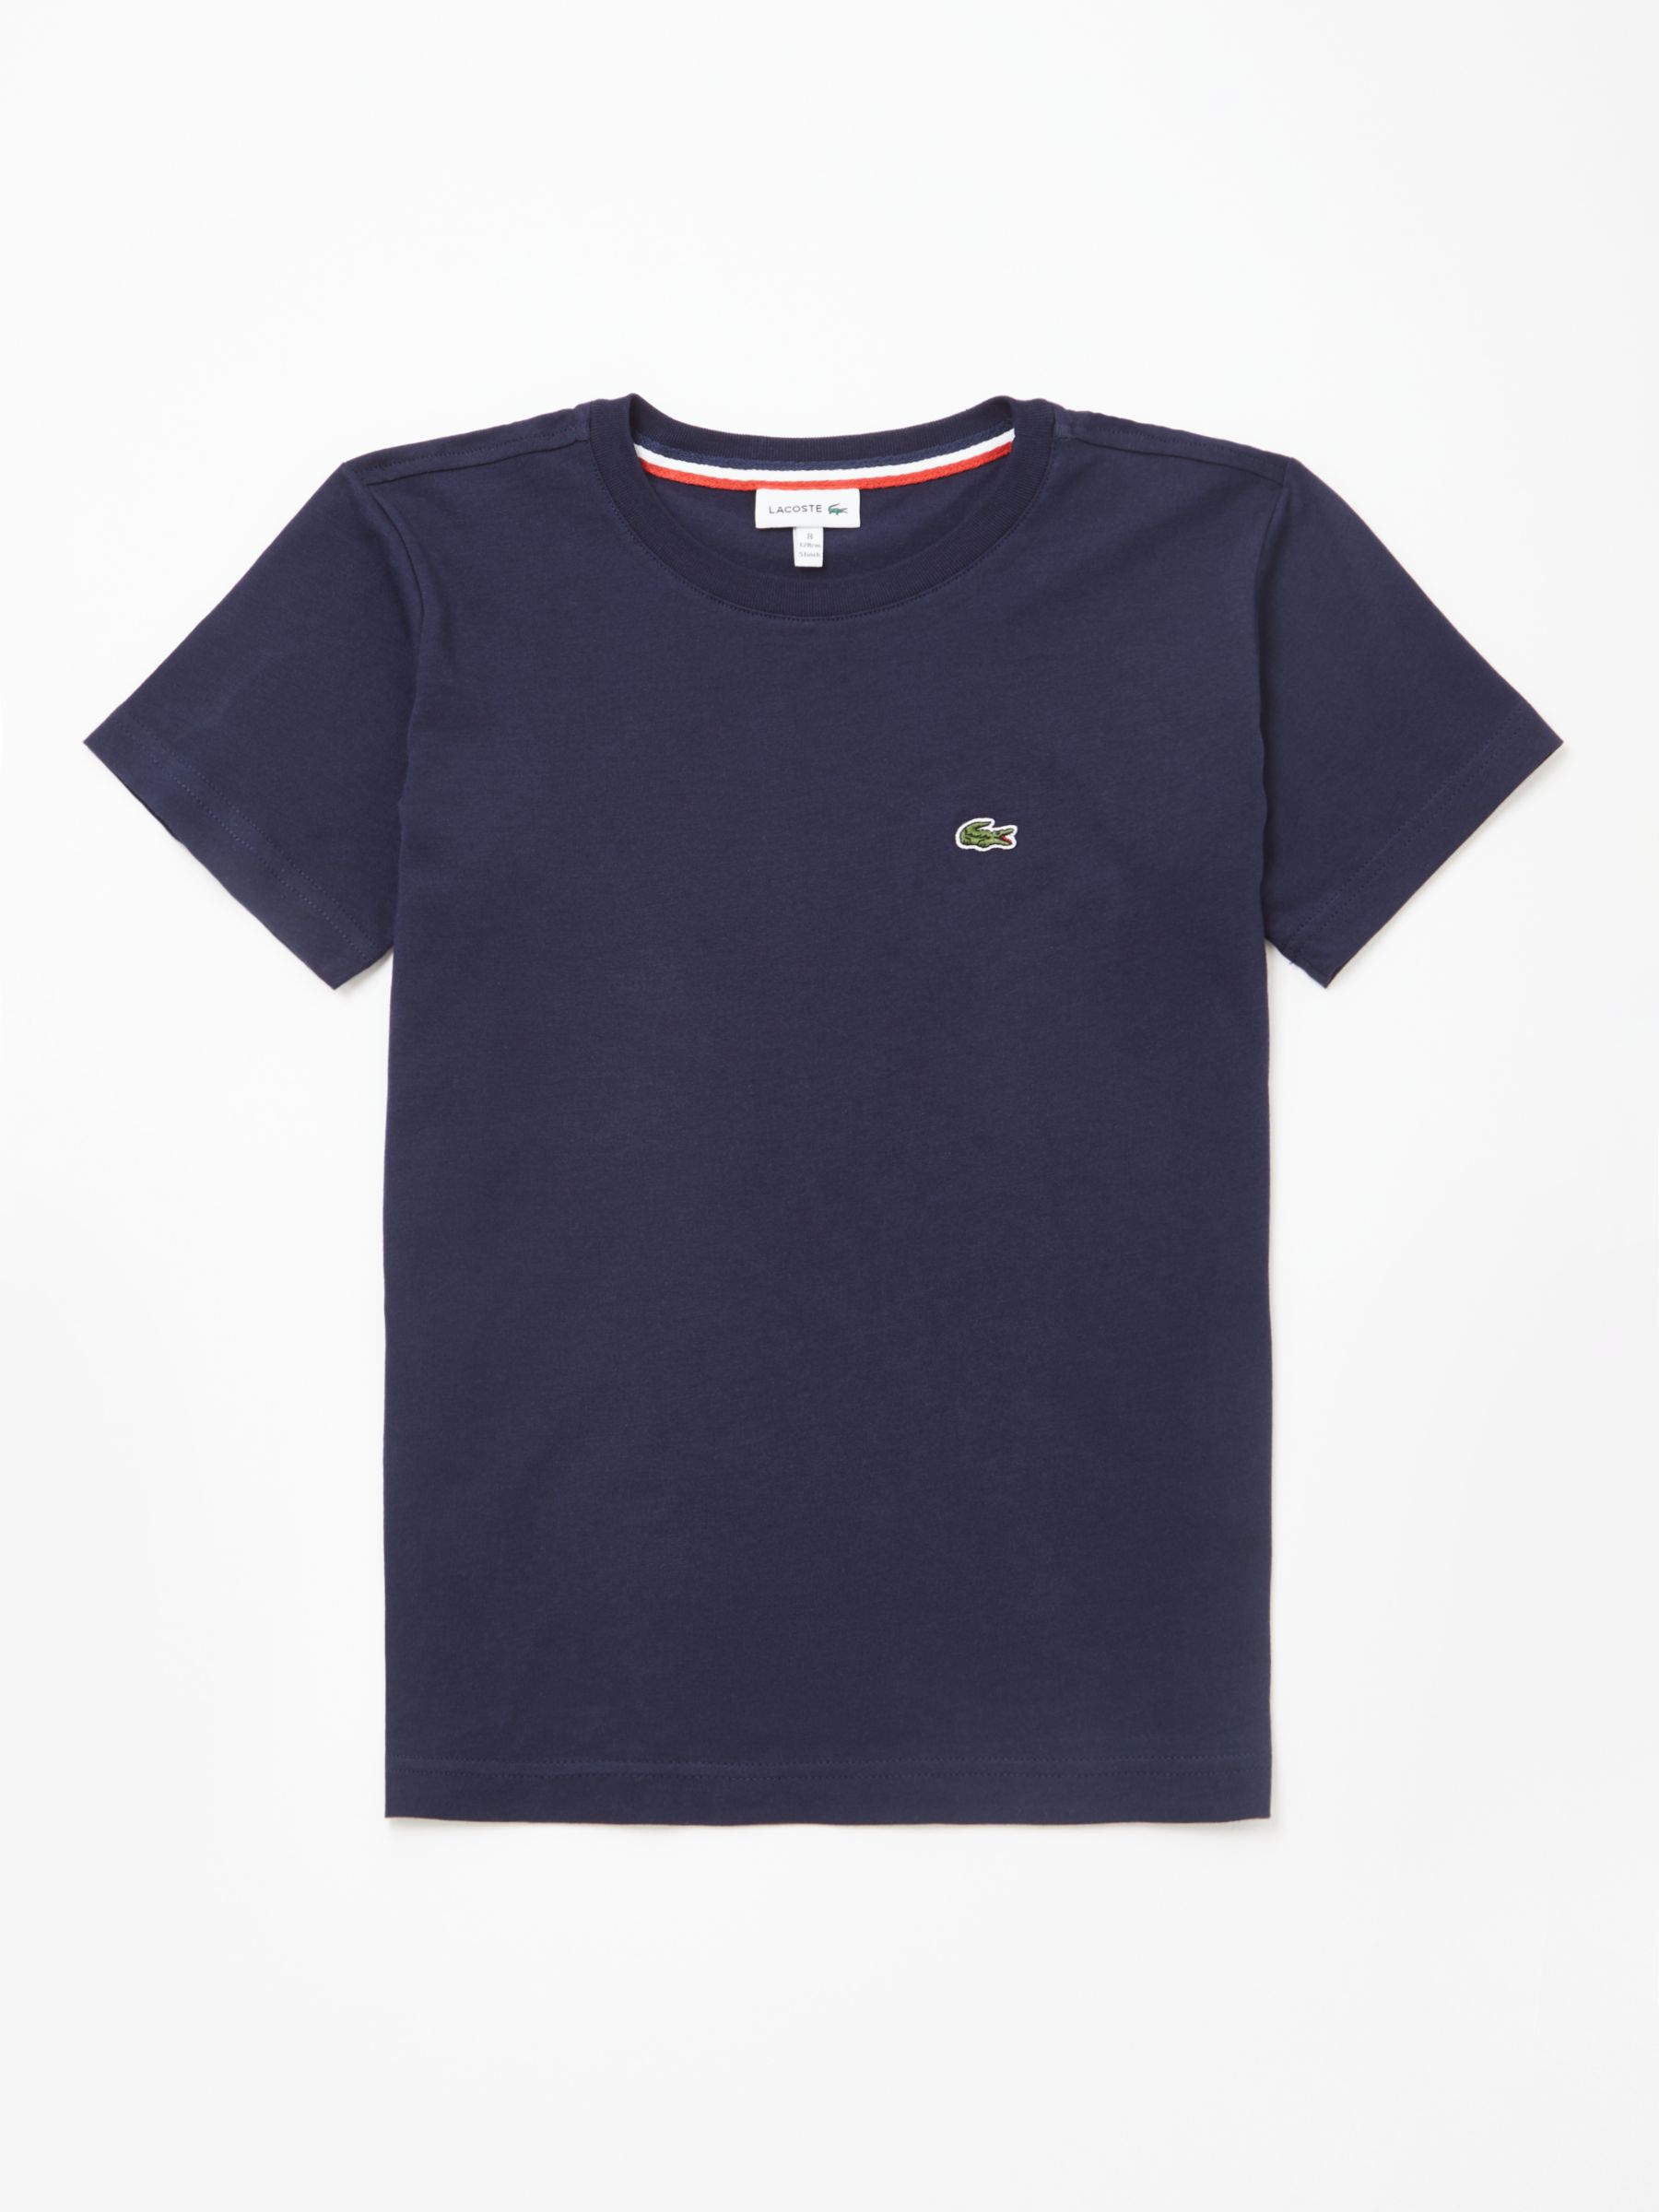 Lacoste Boys' Short Sleeve T-Shirt at 